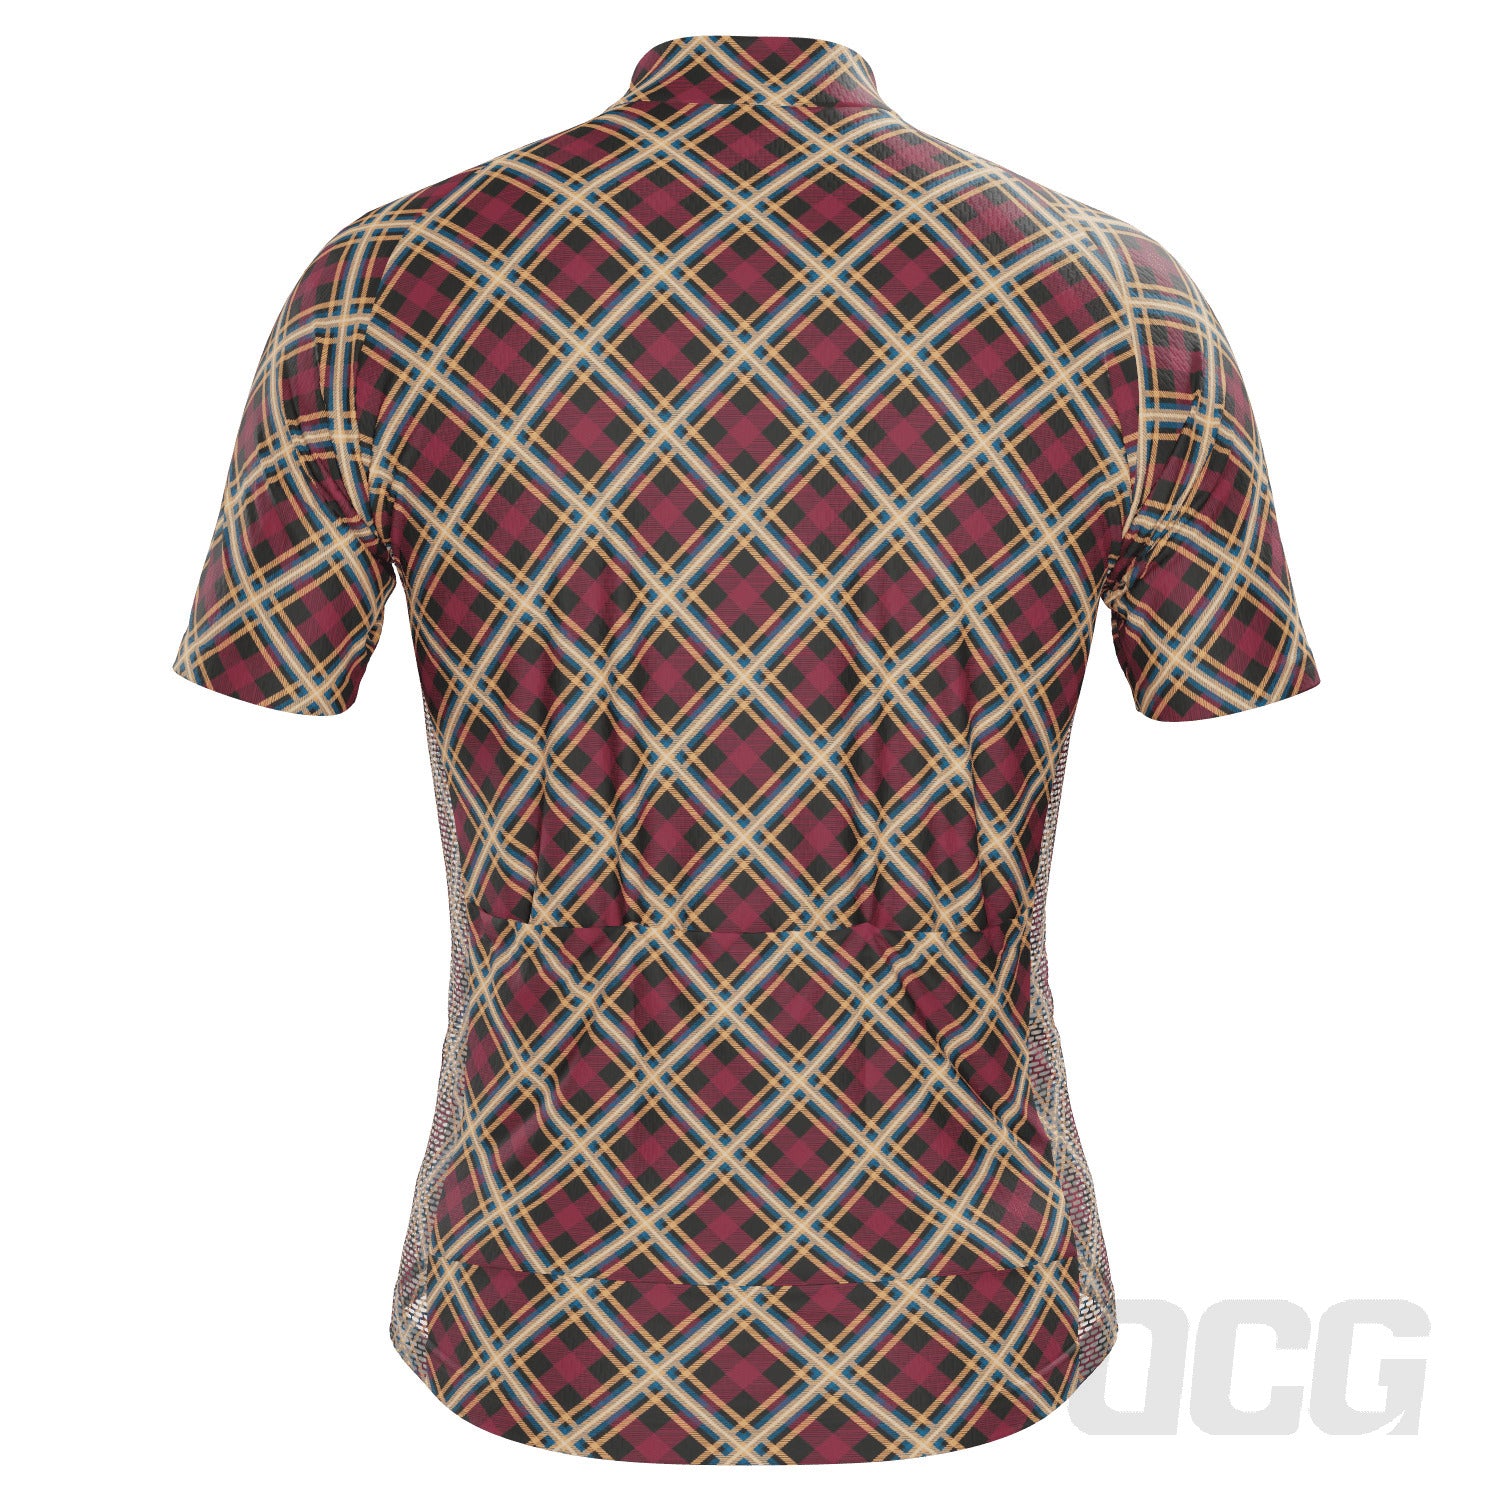 Men's Red Plaid Checkered Shirt Cycling Jersey